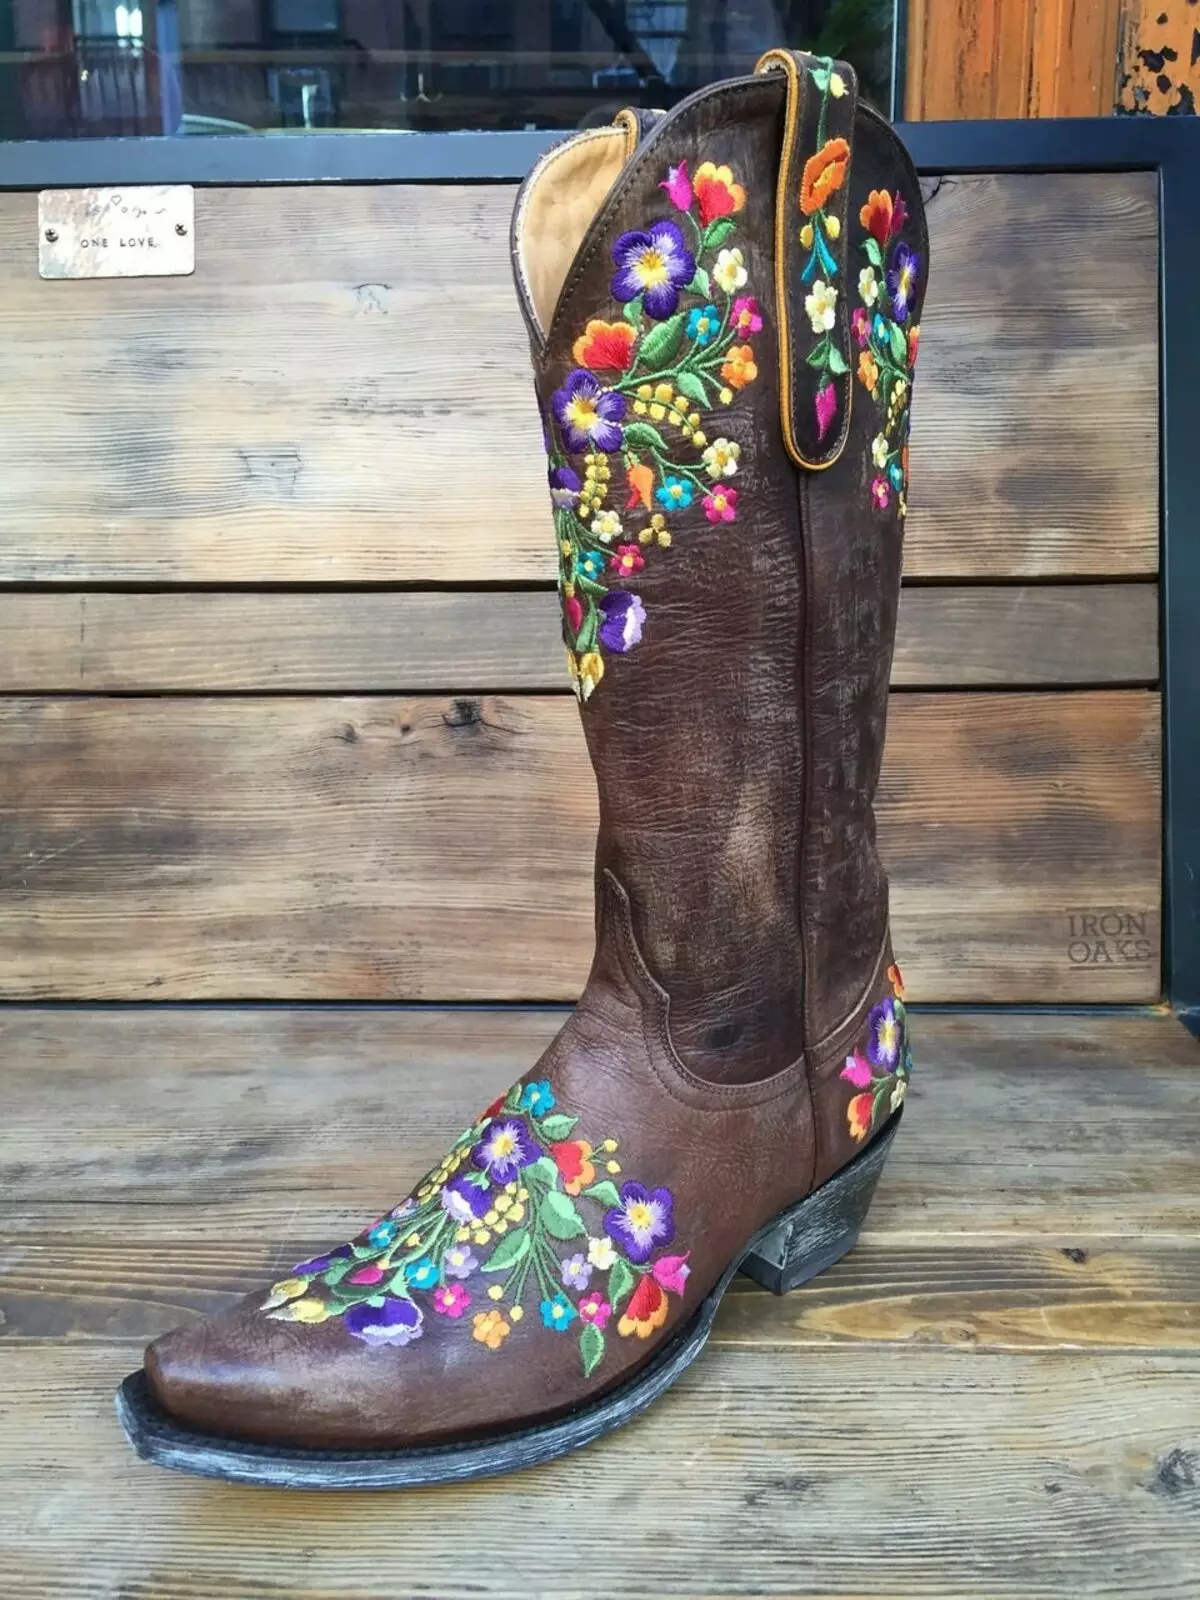 Cowboy μπότες (77 φωτογραφίες): Κοζάκια και μοντέλα στο στυλ του αμερικανικού καουμπόη, που τους φοράει και με τις, χειμωνιάτικες μπότες από γνήσιο δέρμα 2272_38